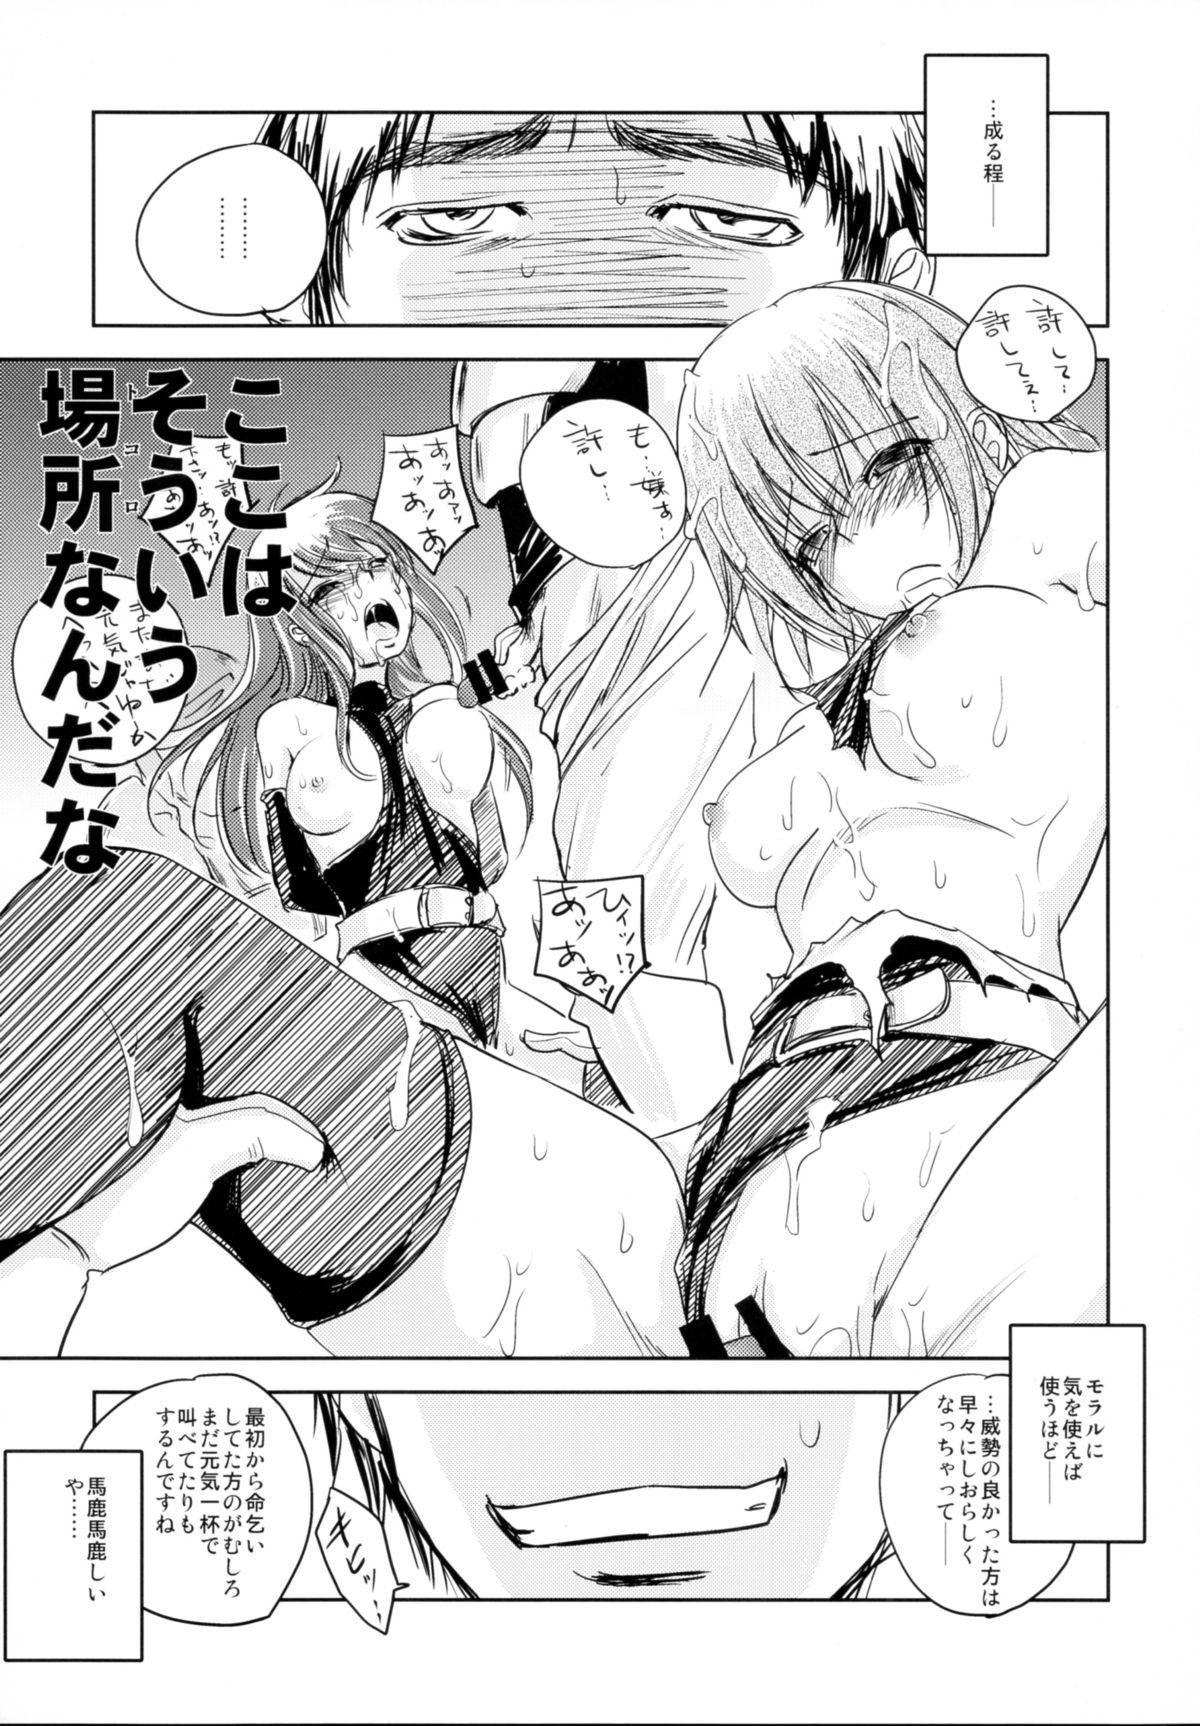 Jap GRASSEN'S WAR ANOTHER STORY Ex #03 Node Shinkou III Fantasy Massage - Page 11